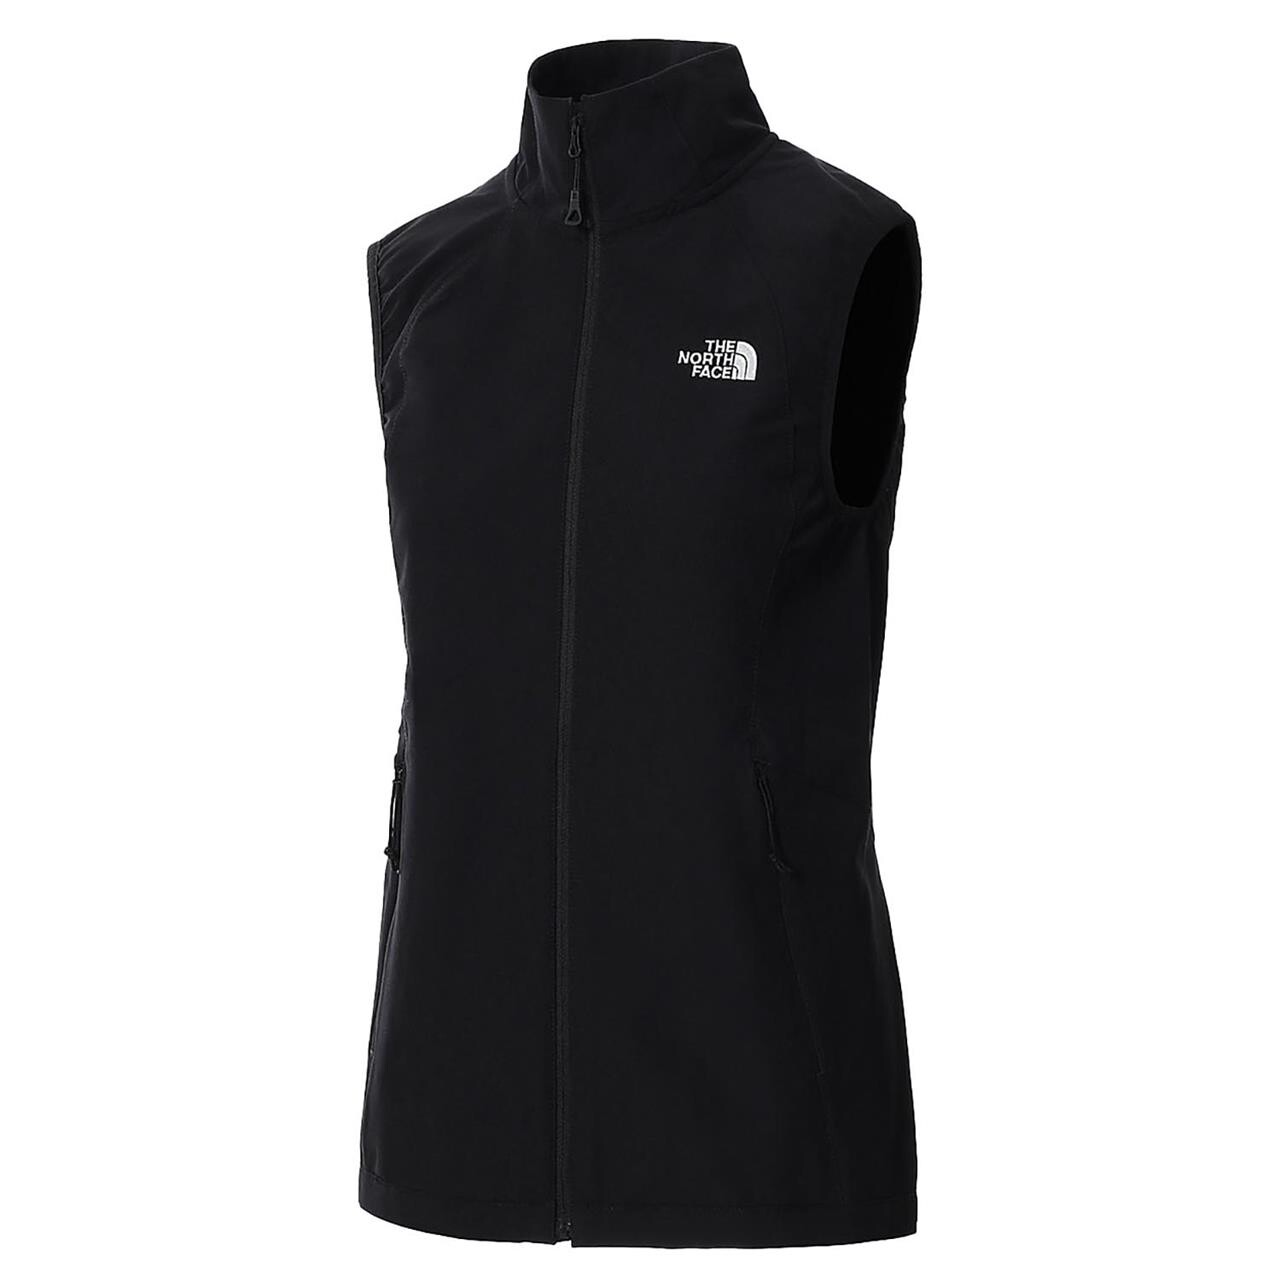 The North Face Womens Nimble Vest  (Sort (TNF BLACK) Large)